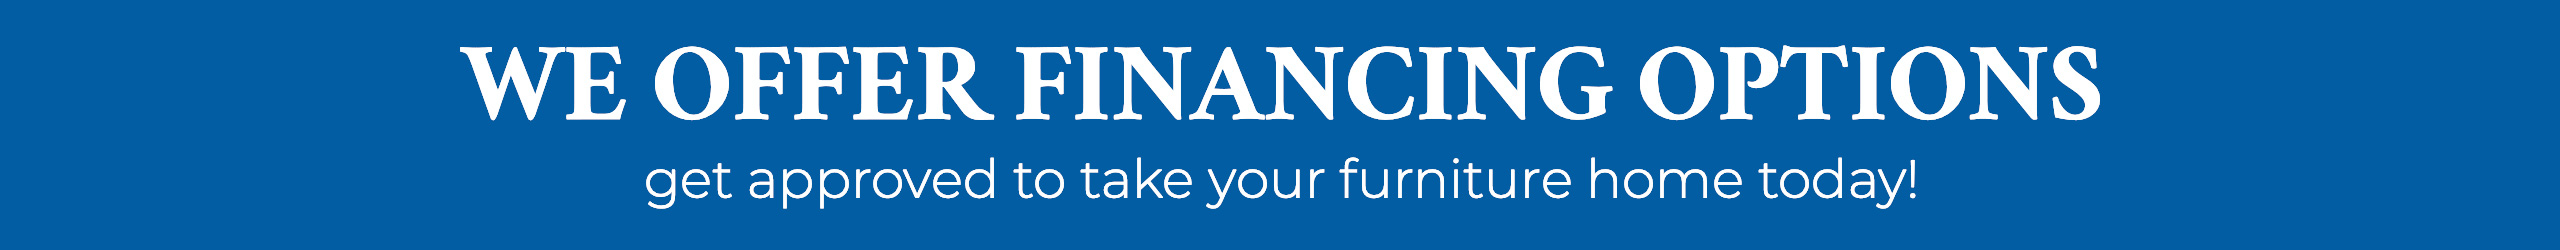 We offer financing options!